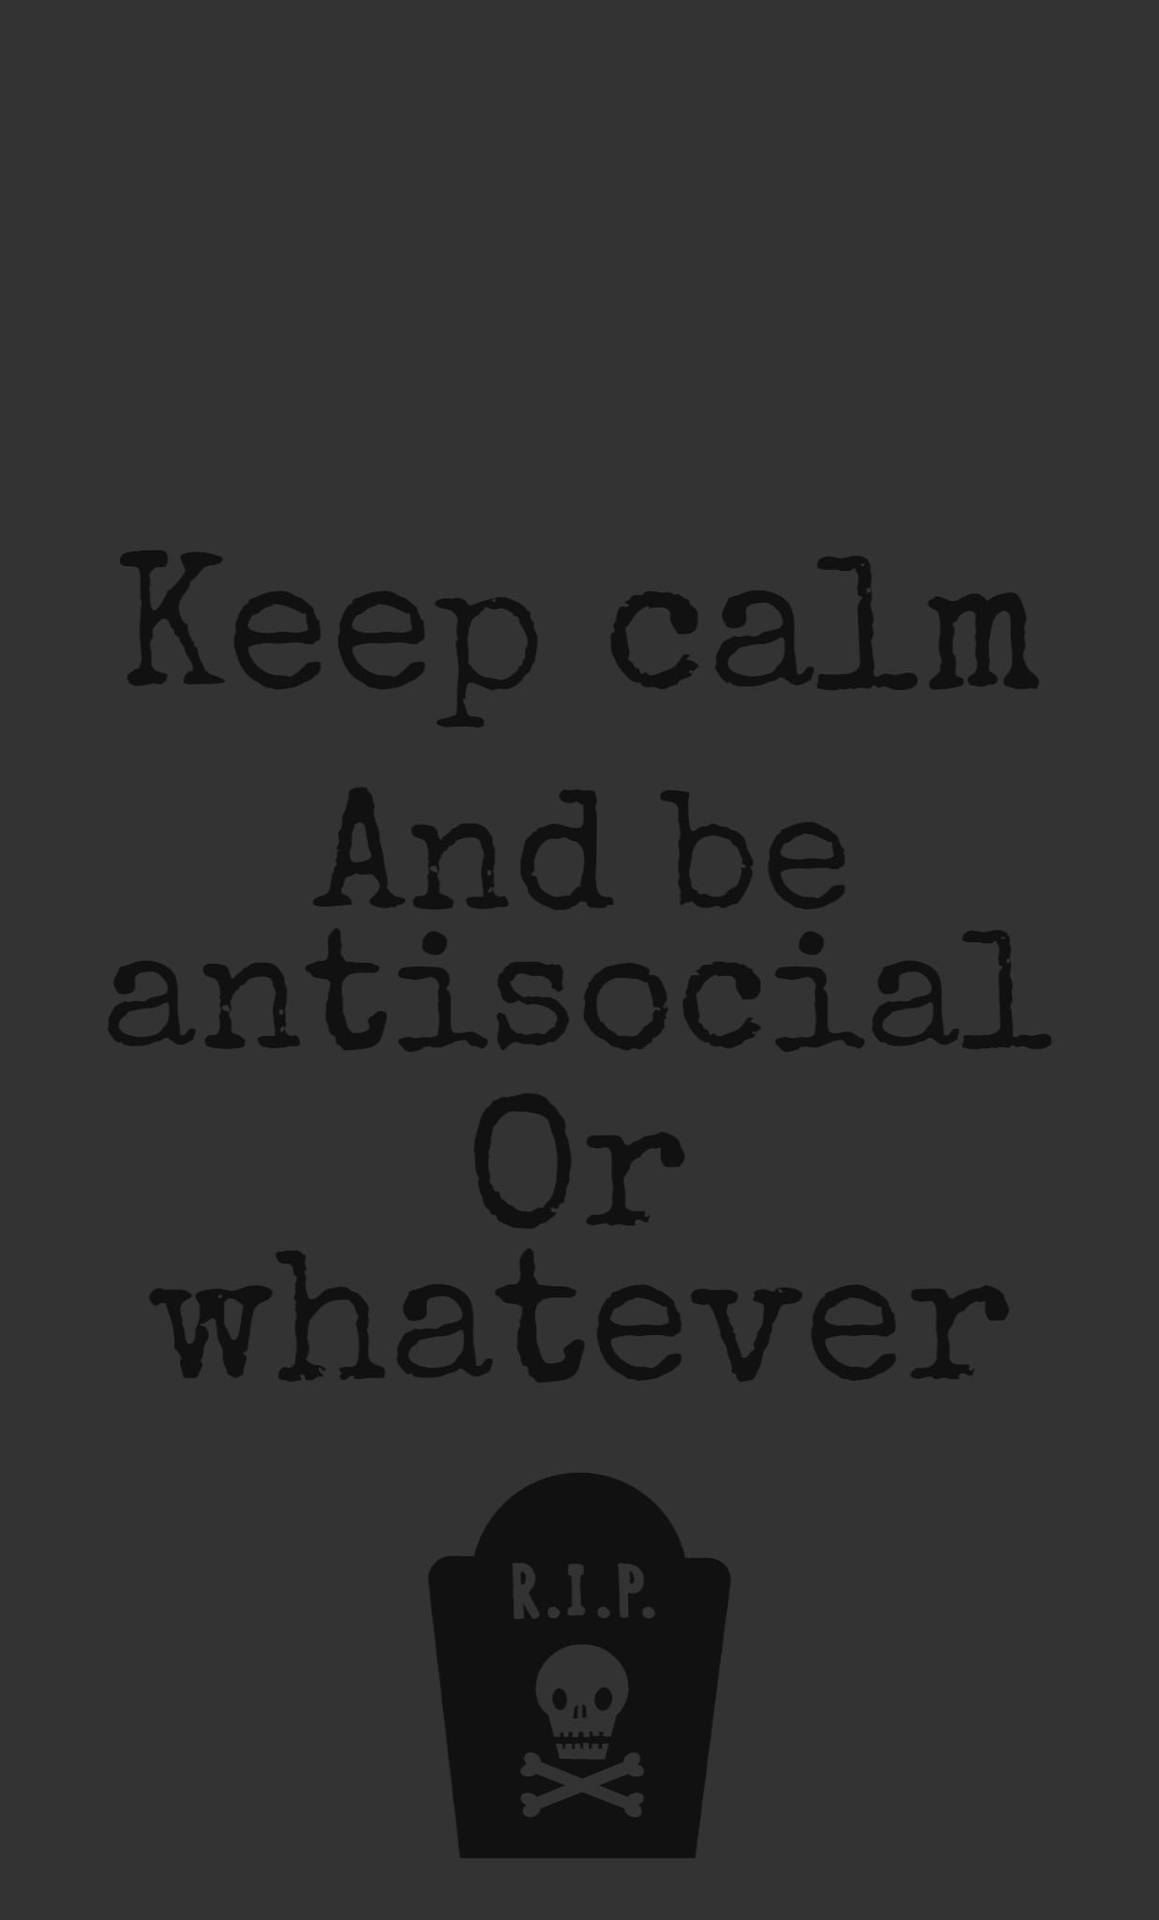 Antisocial Savage Quotes Wallpaper